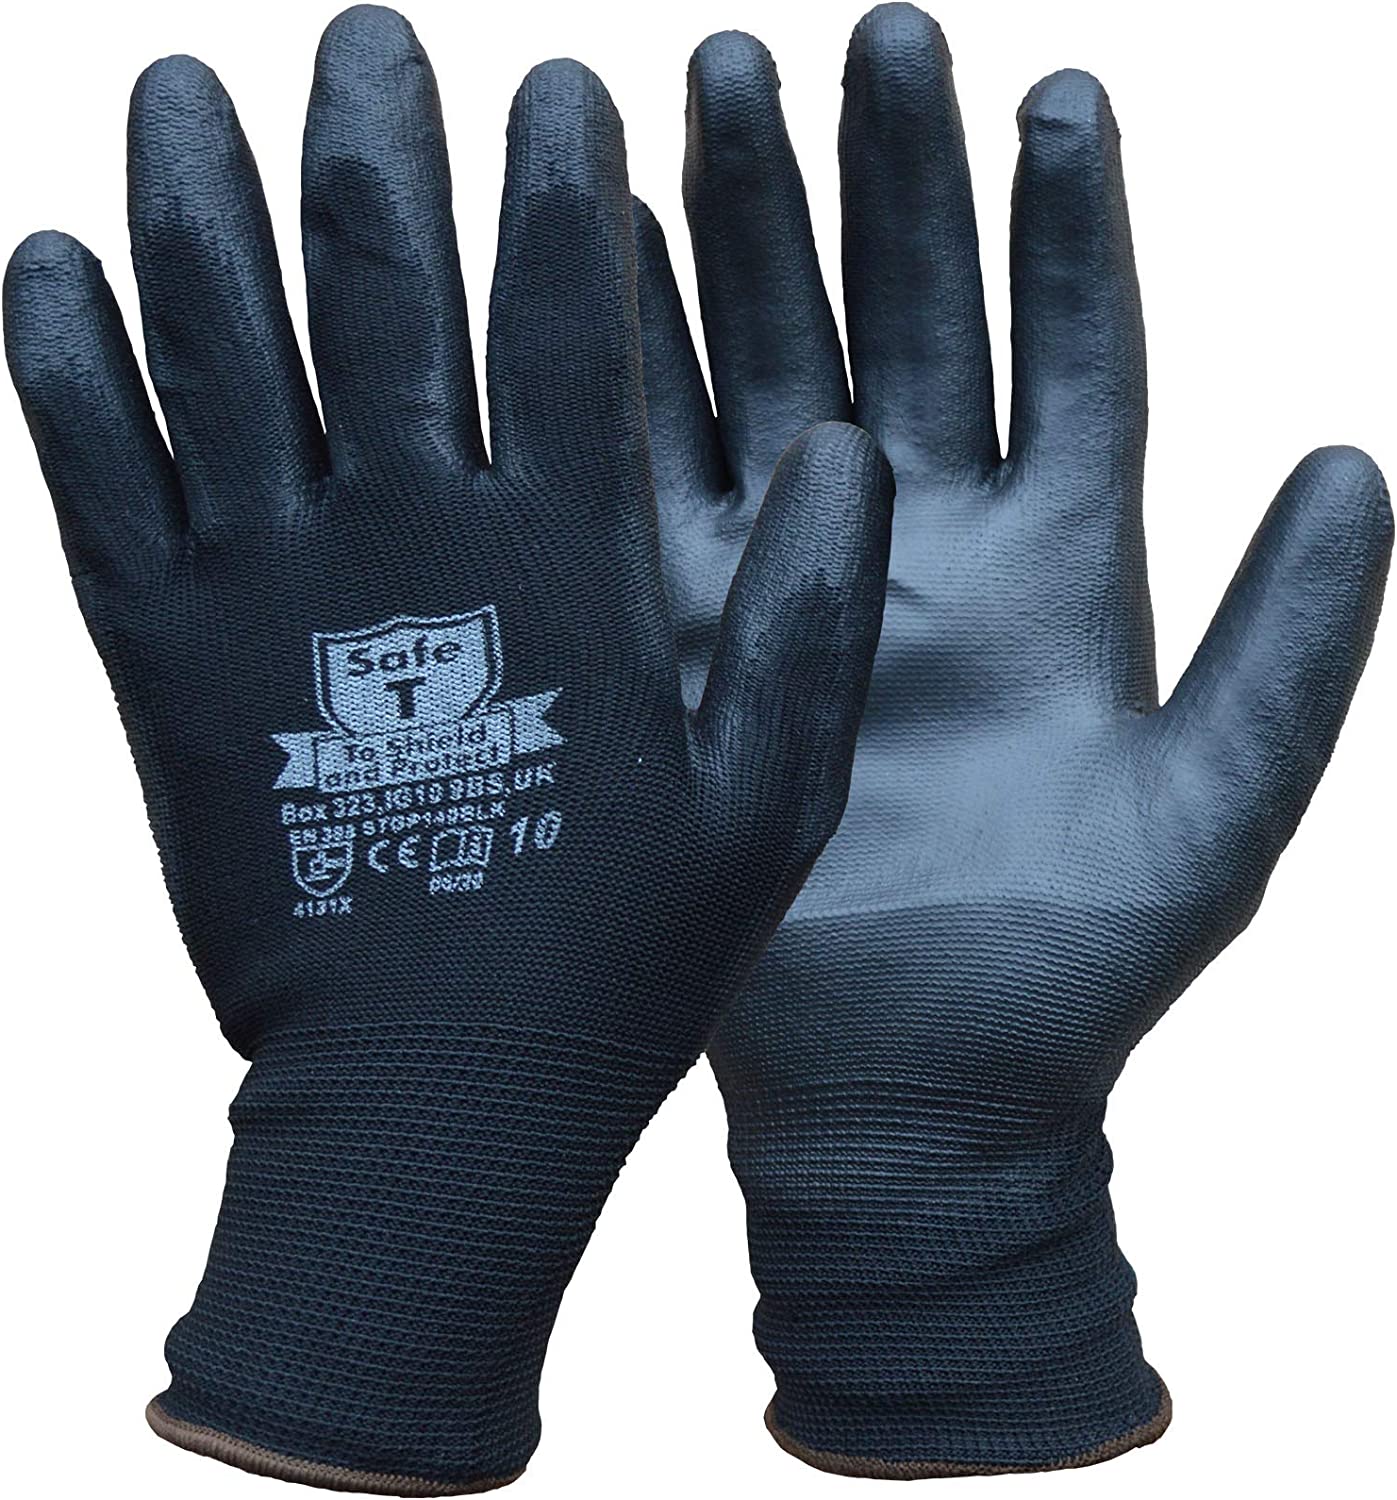 Safe-T Protective Gloves - Size 9 (L)